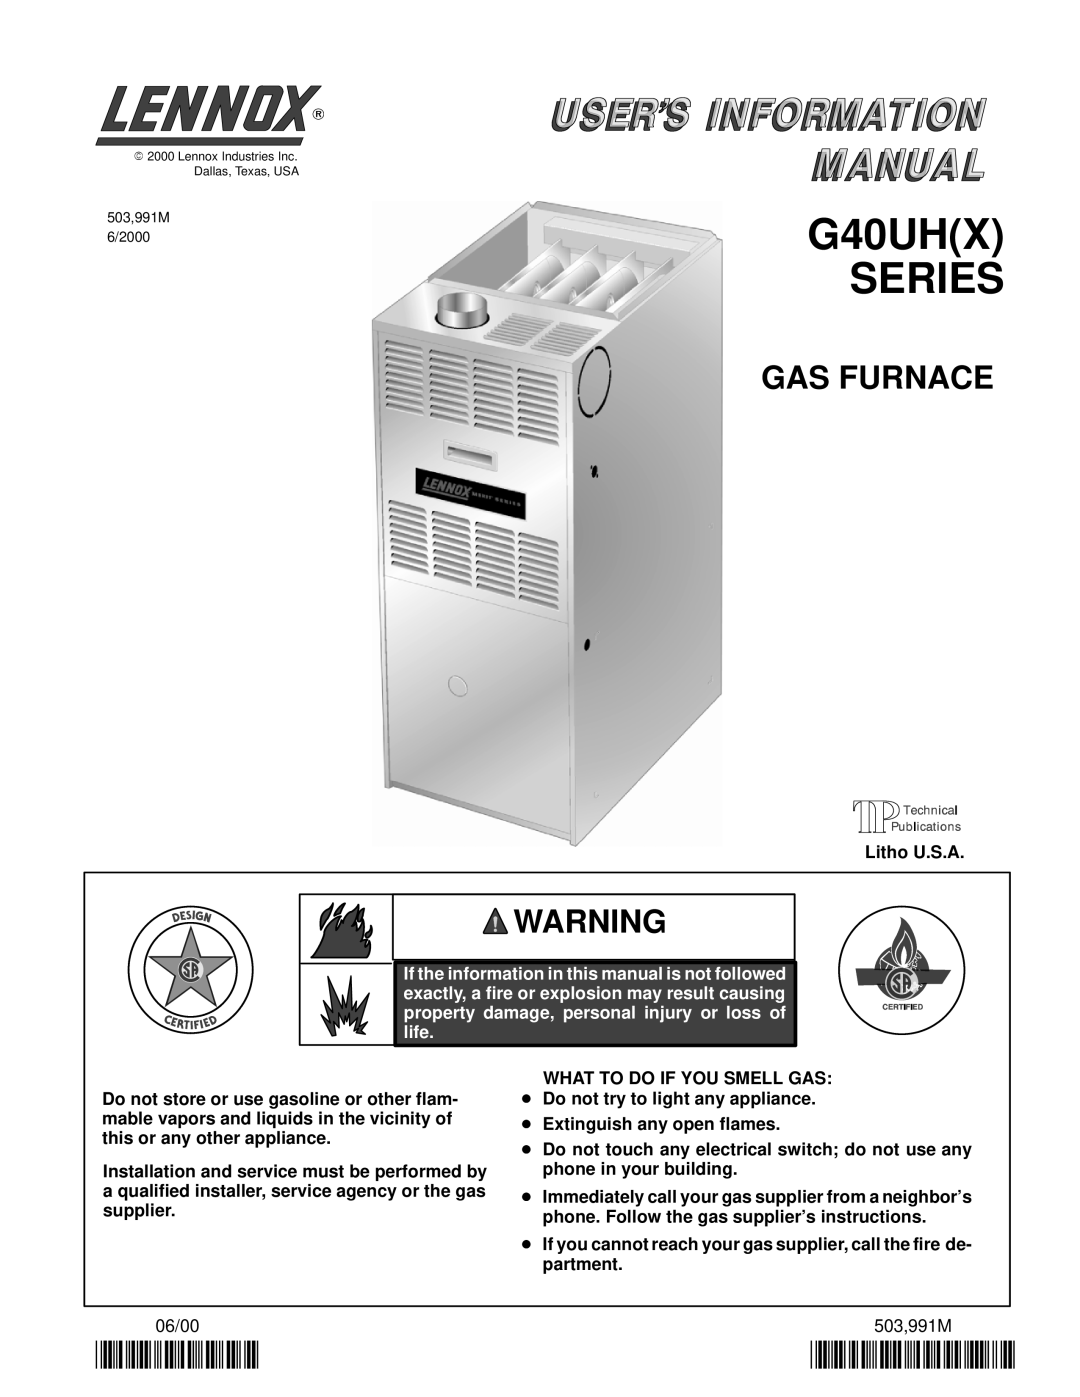 Lennox International Inc G40UH(X) manual G40UHX SERIES, Gas Furnace 